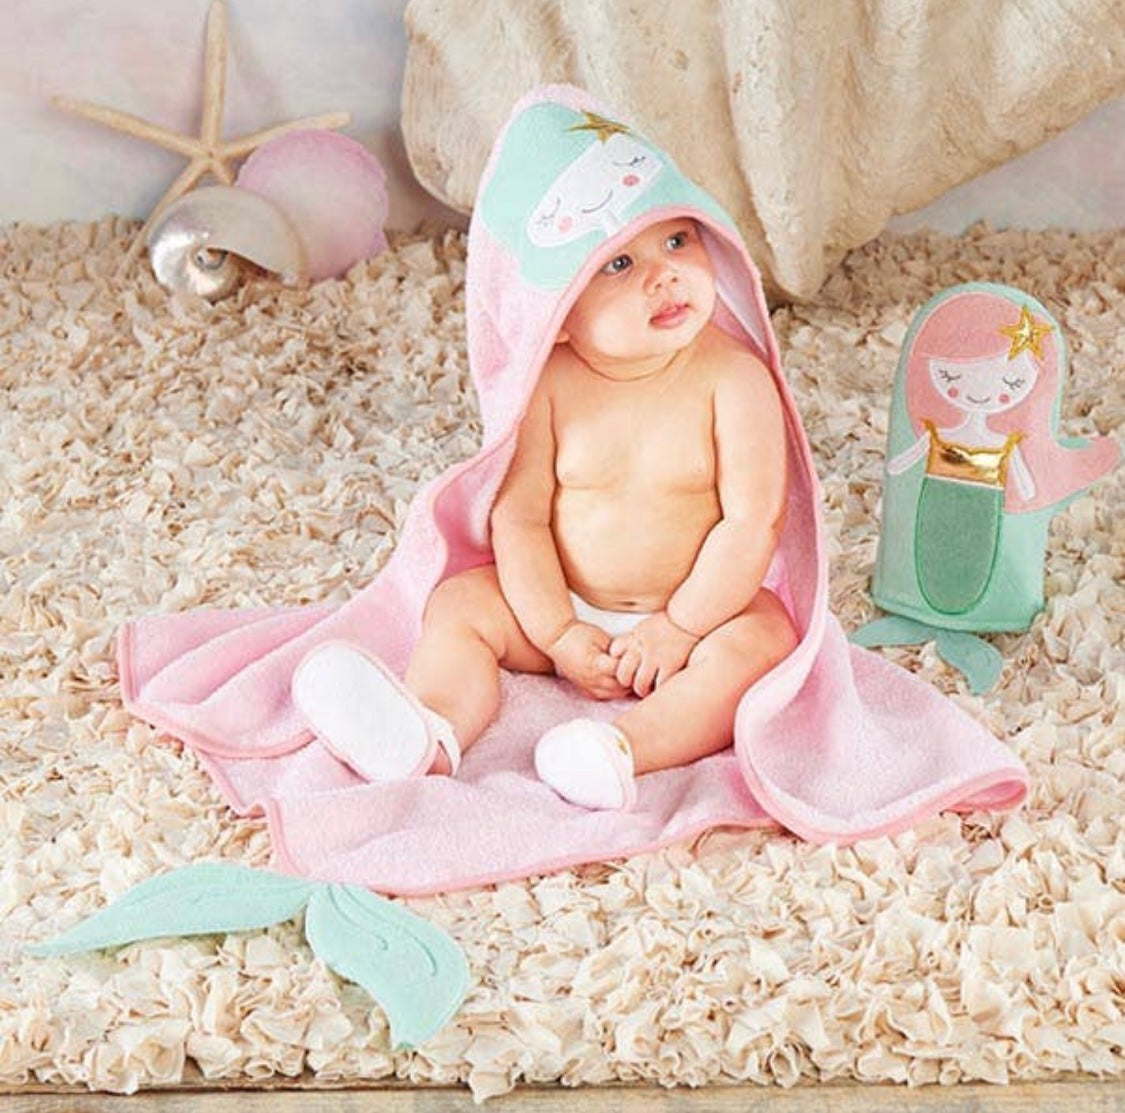 Simply enchanted mermaid 4-piece bath time gift set Baby Aspen